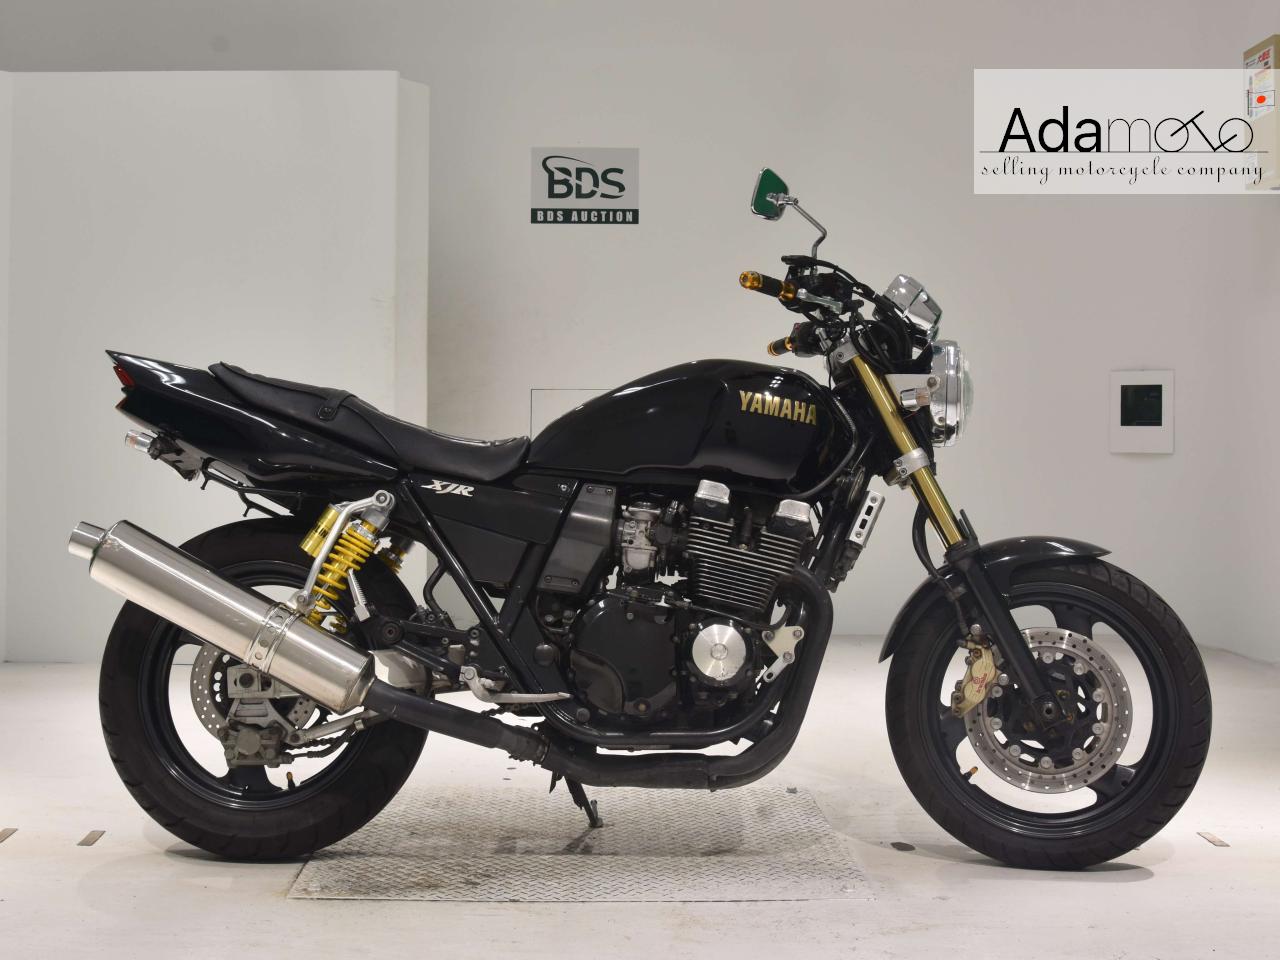 Yamaha XJR400R-2 - Adamoto - Motorcycles from Japan